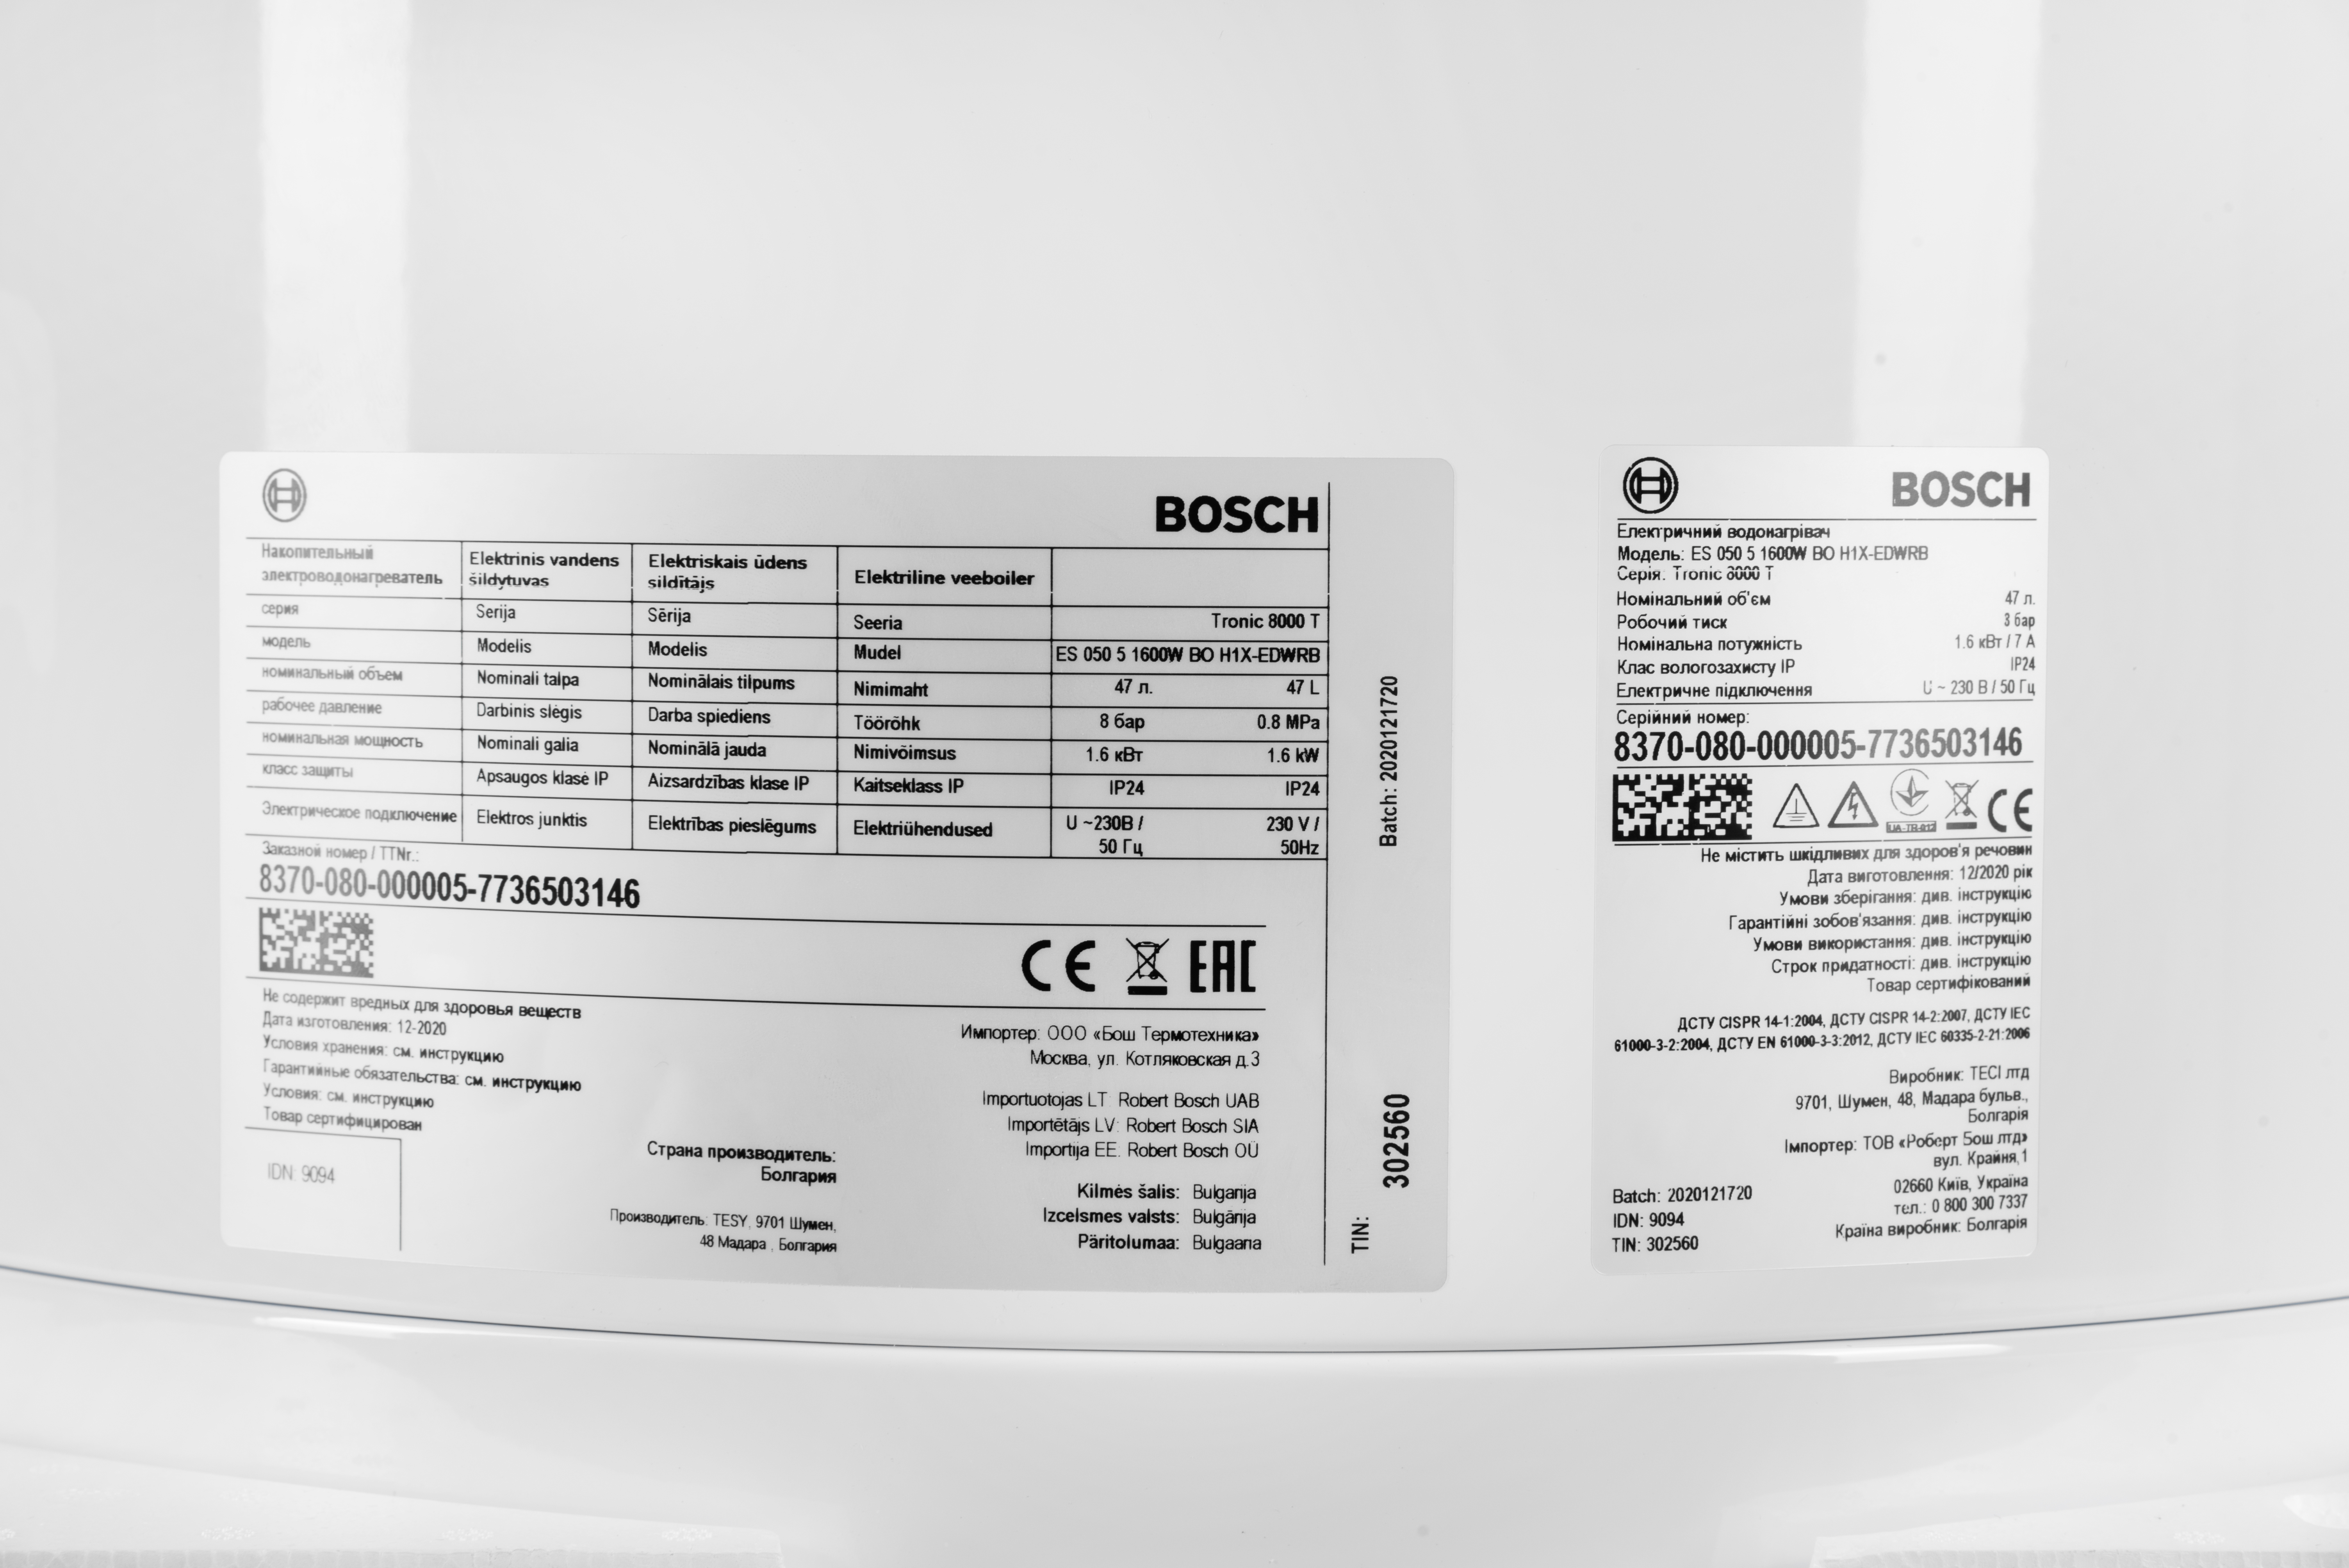 товар Bosch Tronic 8000T ES 050-5 1600W BO H1X-EDWRB (7736503146) - фото 13